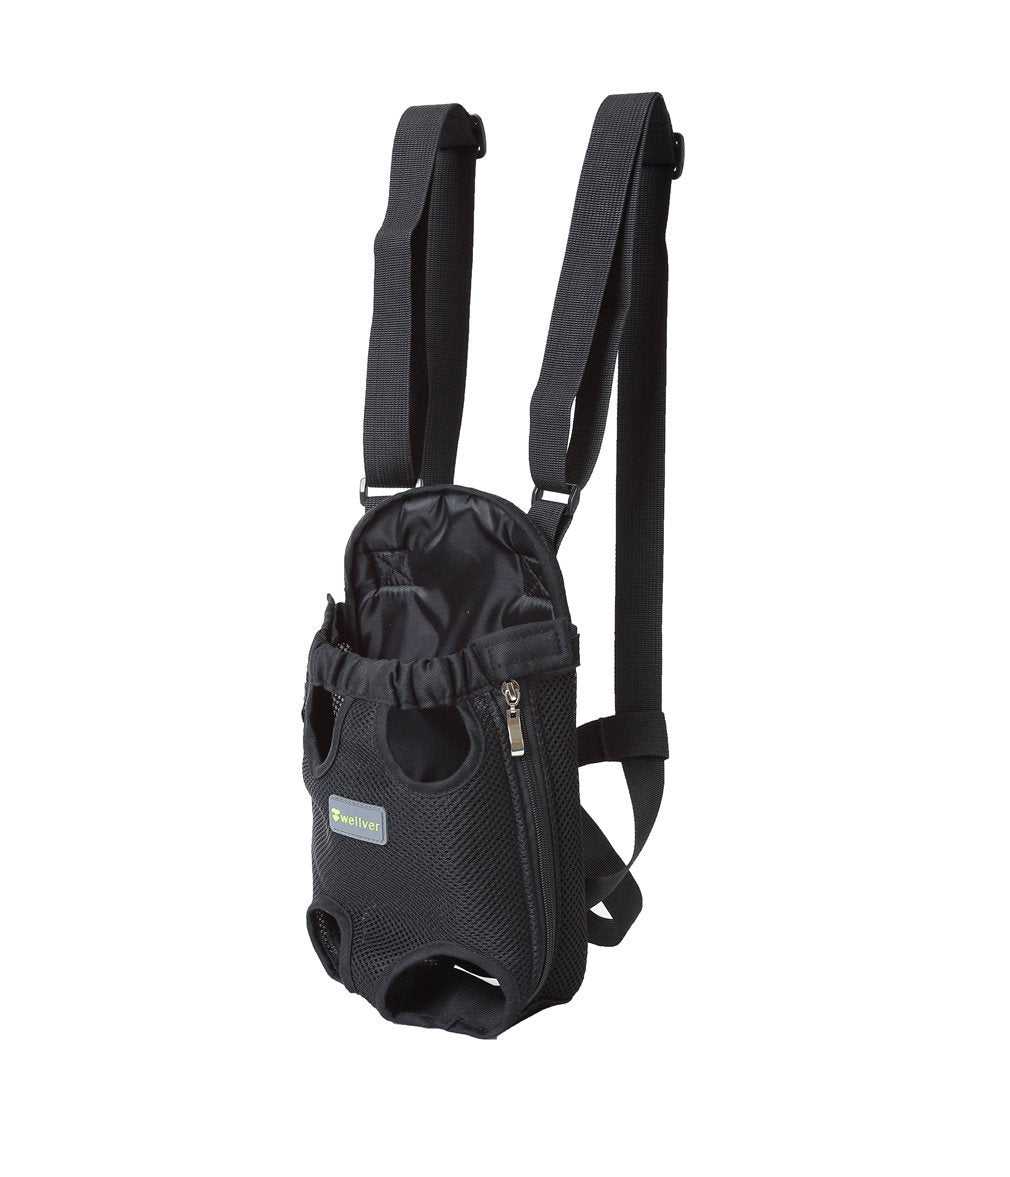 Wellver Dog Front Carrier (Small Black Bag & Medium Blue Bag)